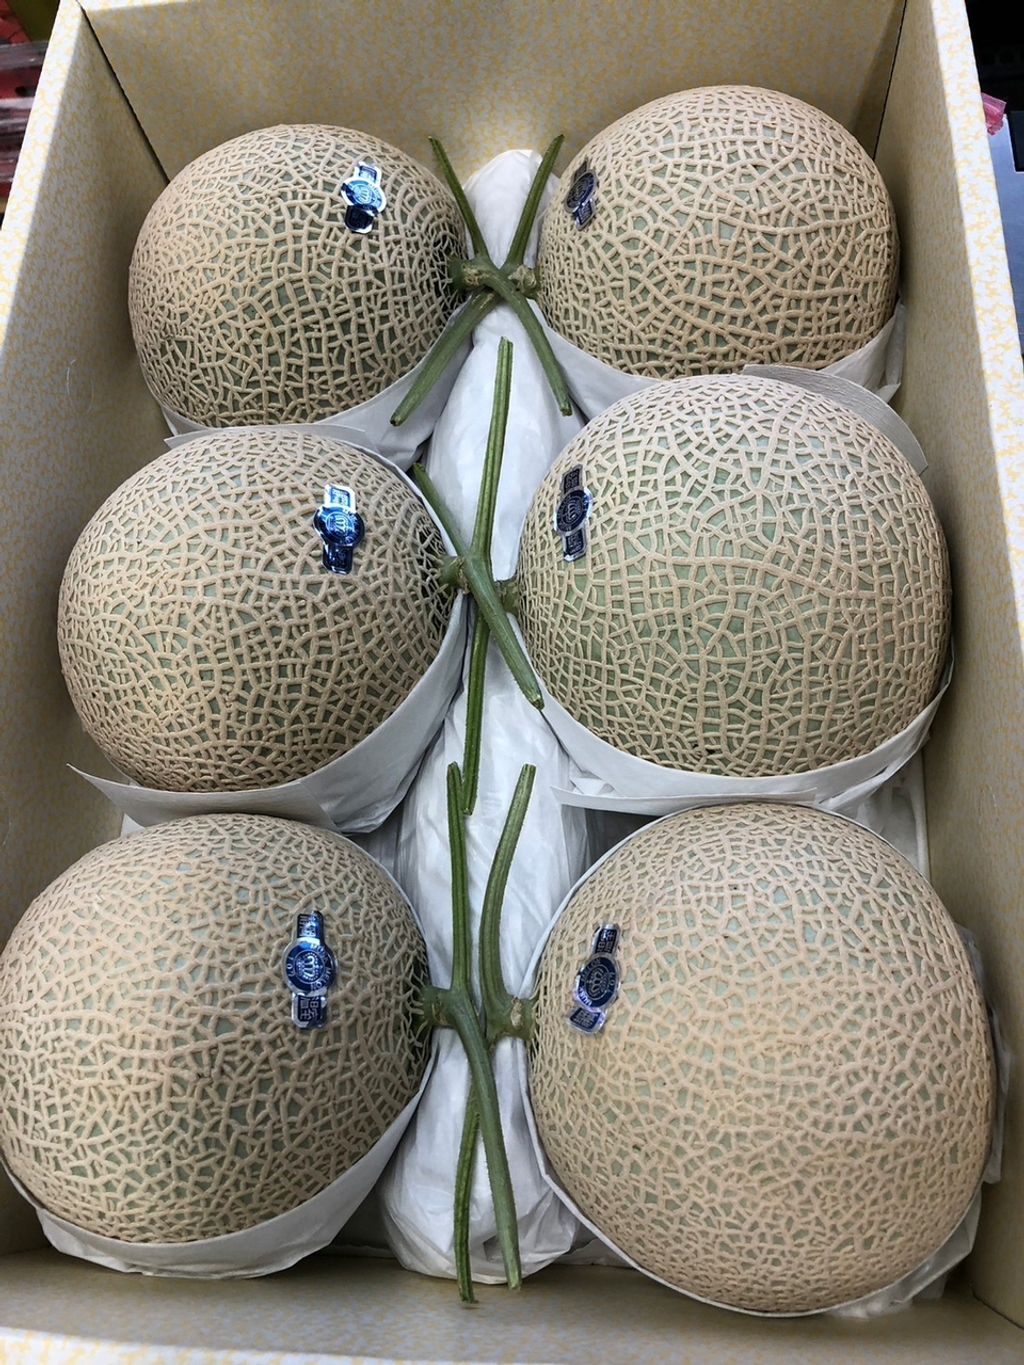 Japan Premium Greenhouse Shizuoka Crown Green Melon 静岡クラウンメロン (approx 8KG+ per carton)